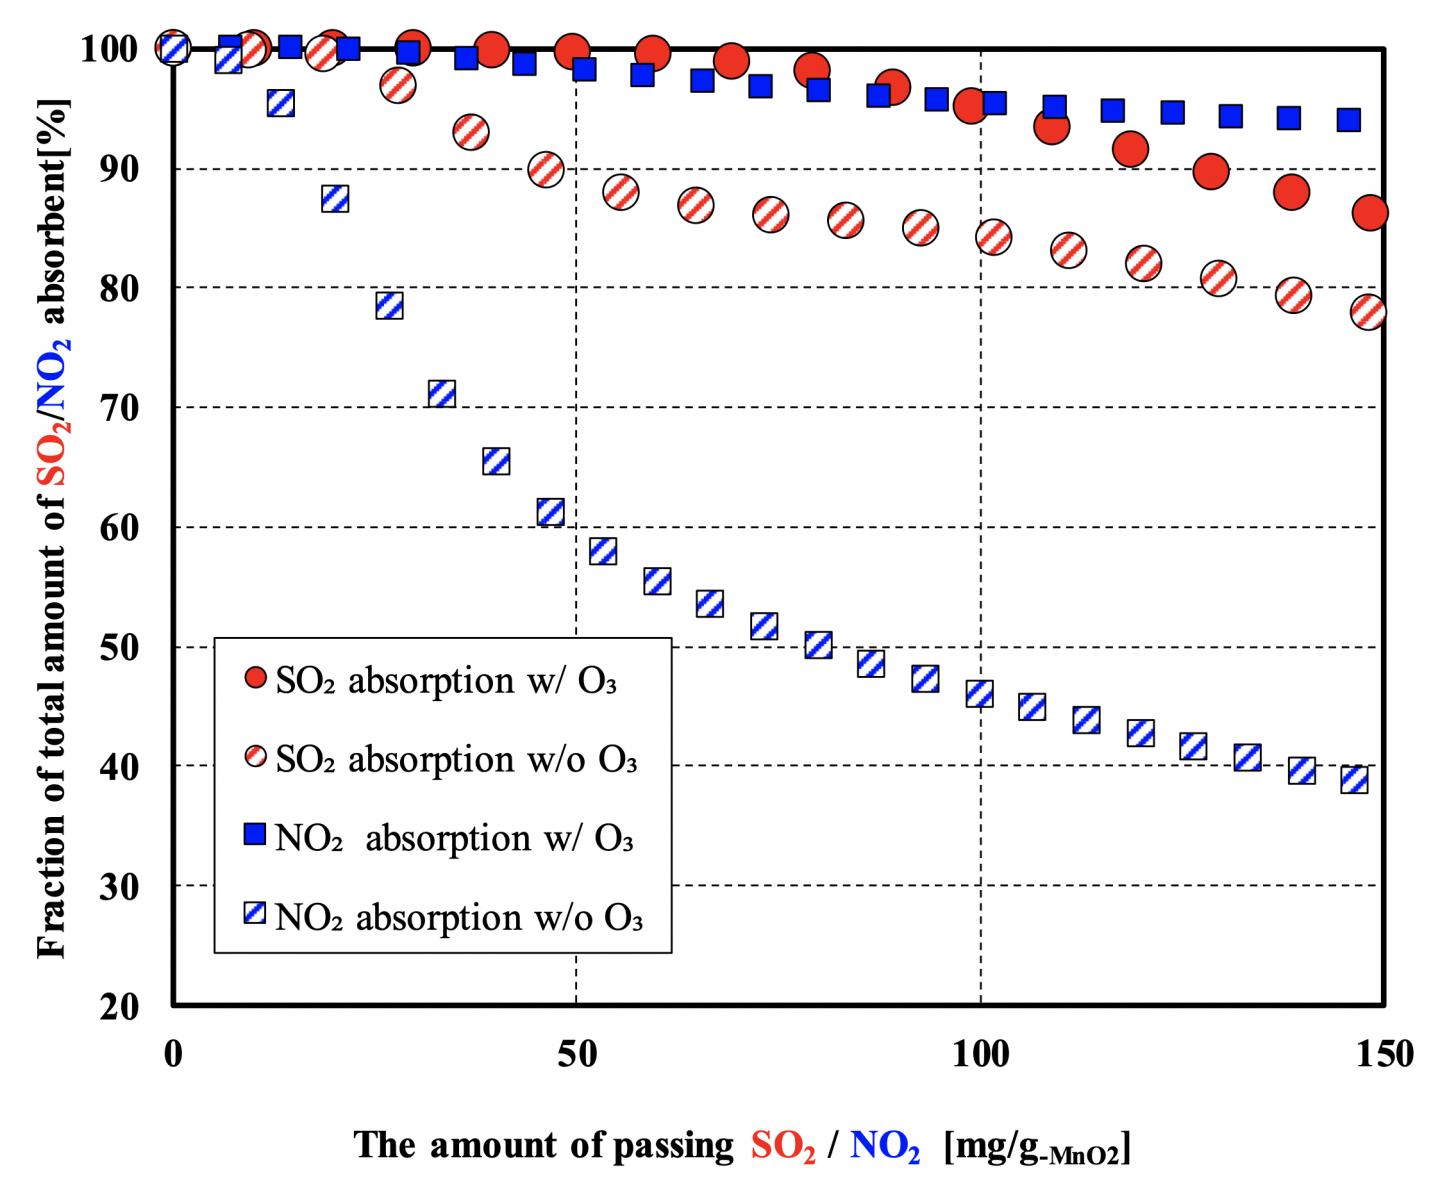 Figure 2. The Effect of Ozone Induction on SO<sub>2</sub> and NO<sub>2</sub> Elimination